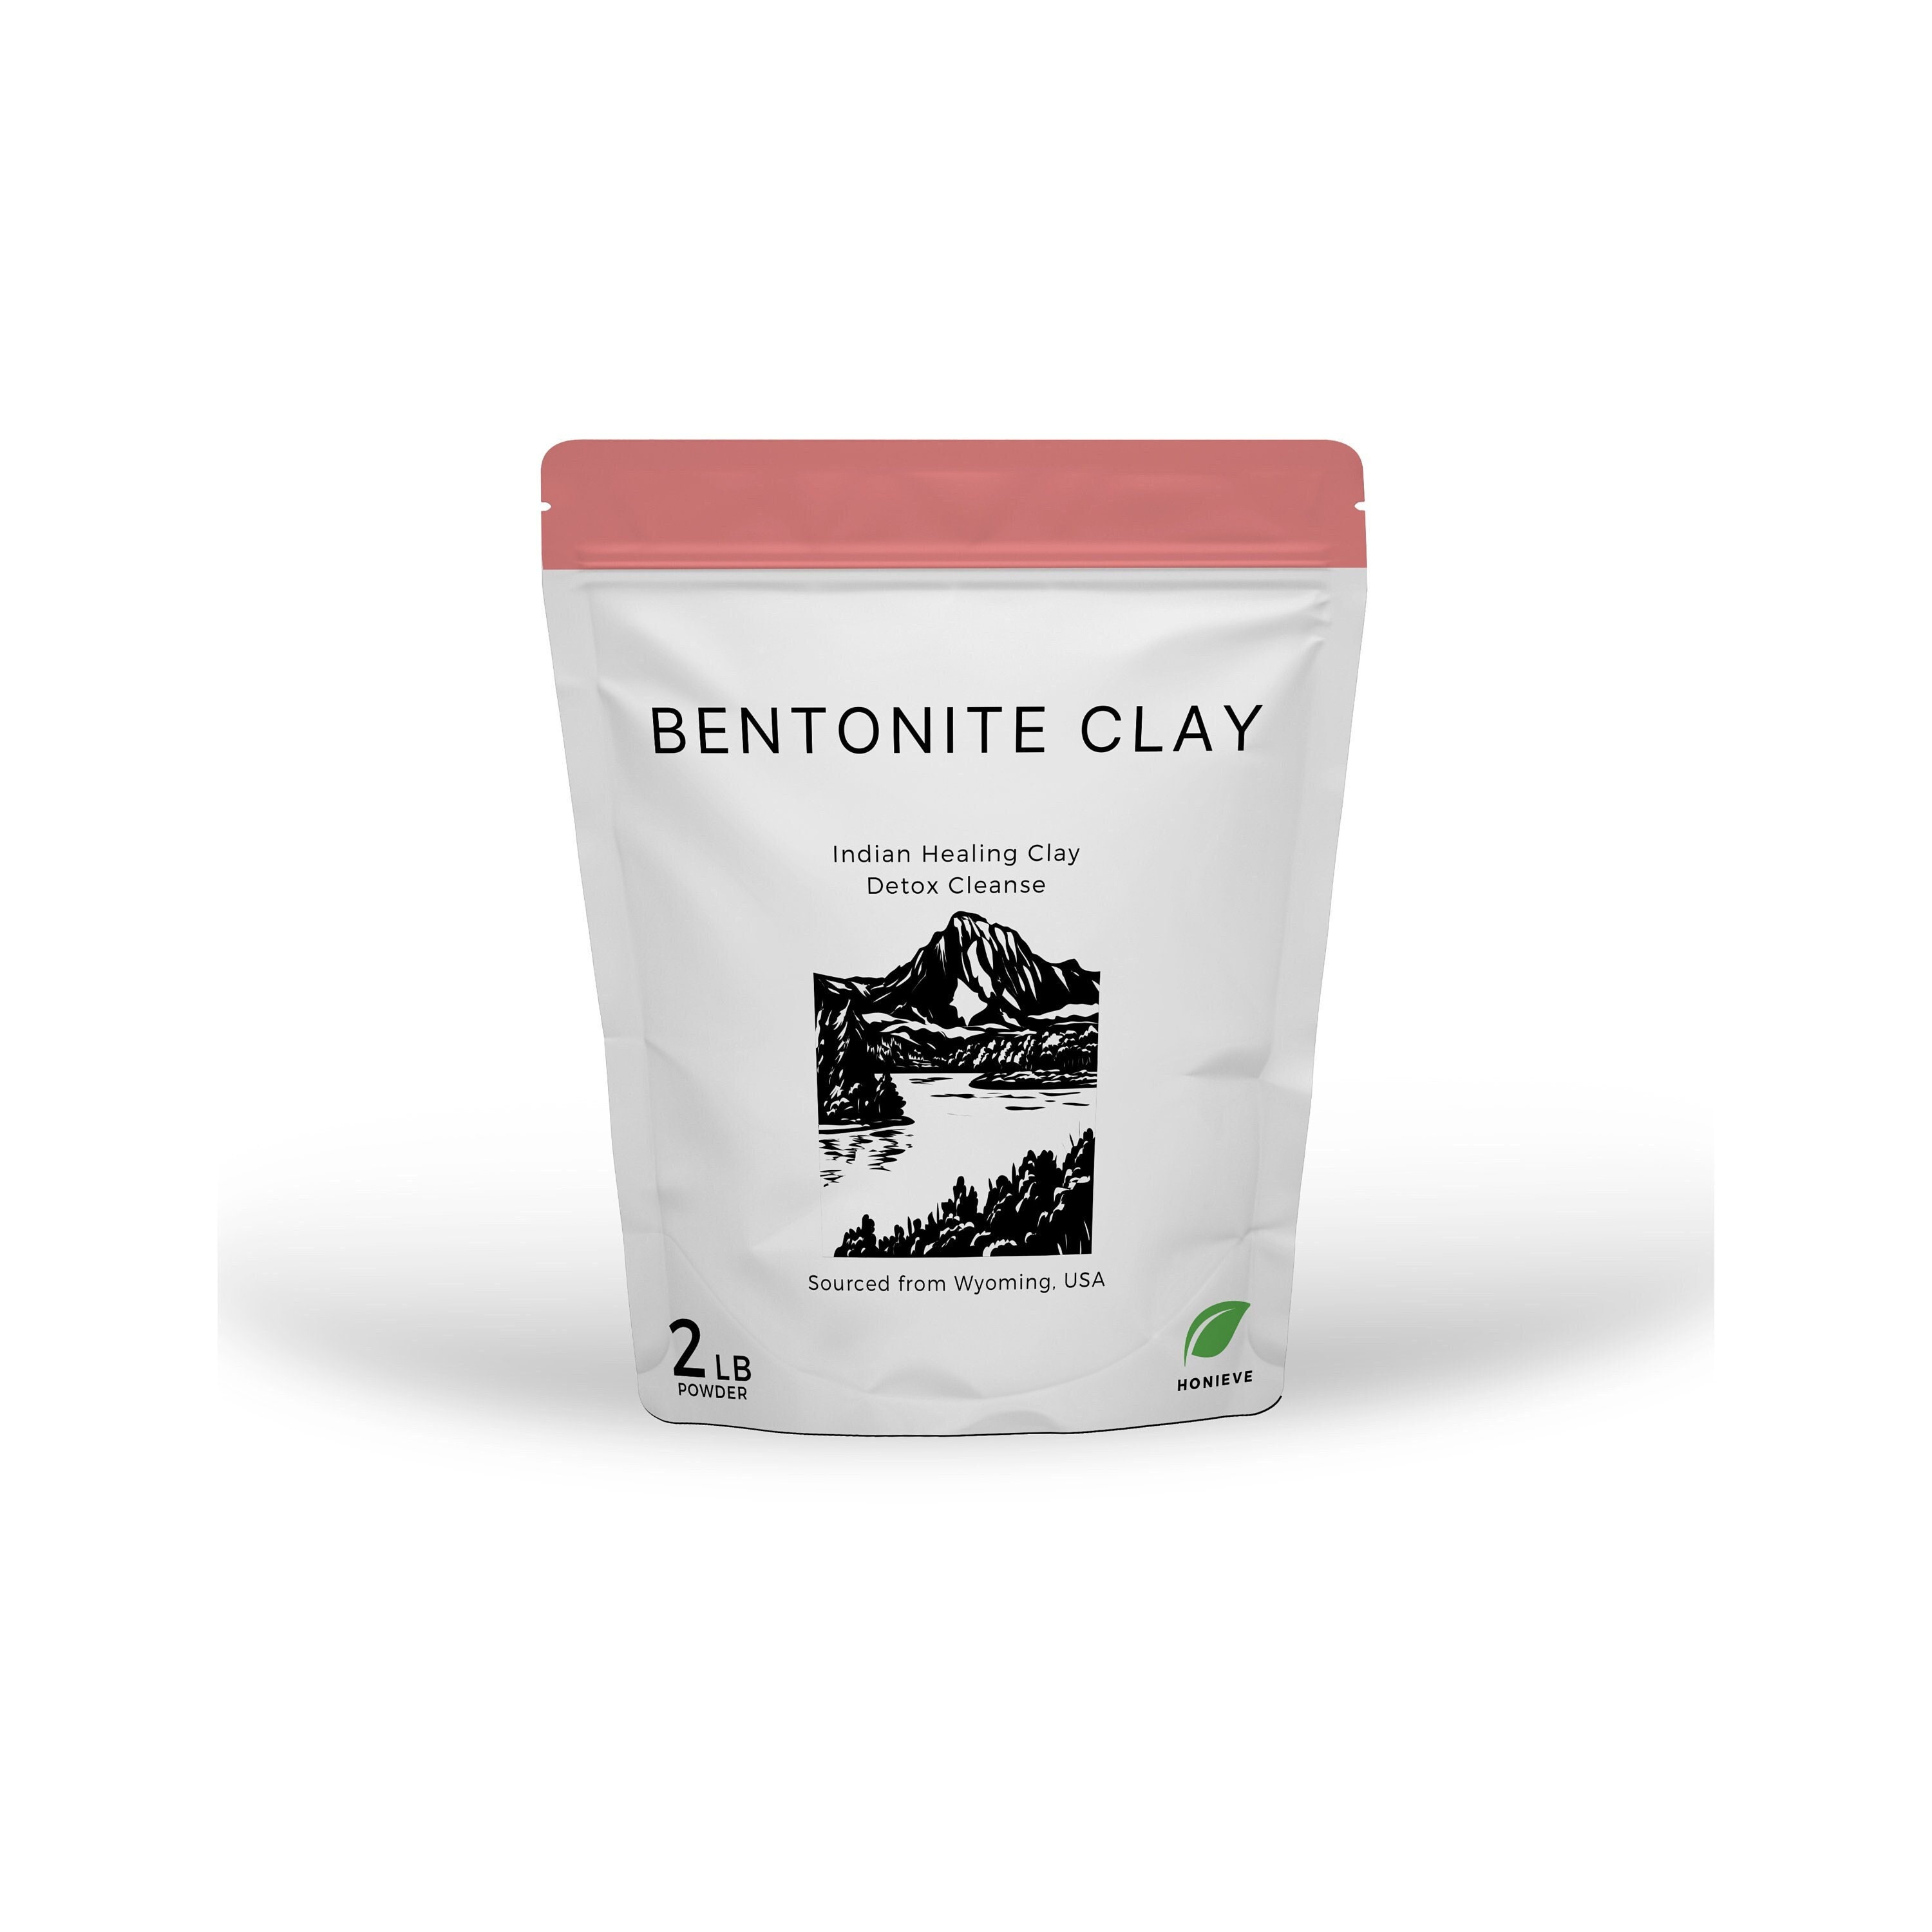 Bentonite Clay Oral Care Products: A Healthy Choice or Hidden